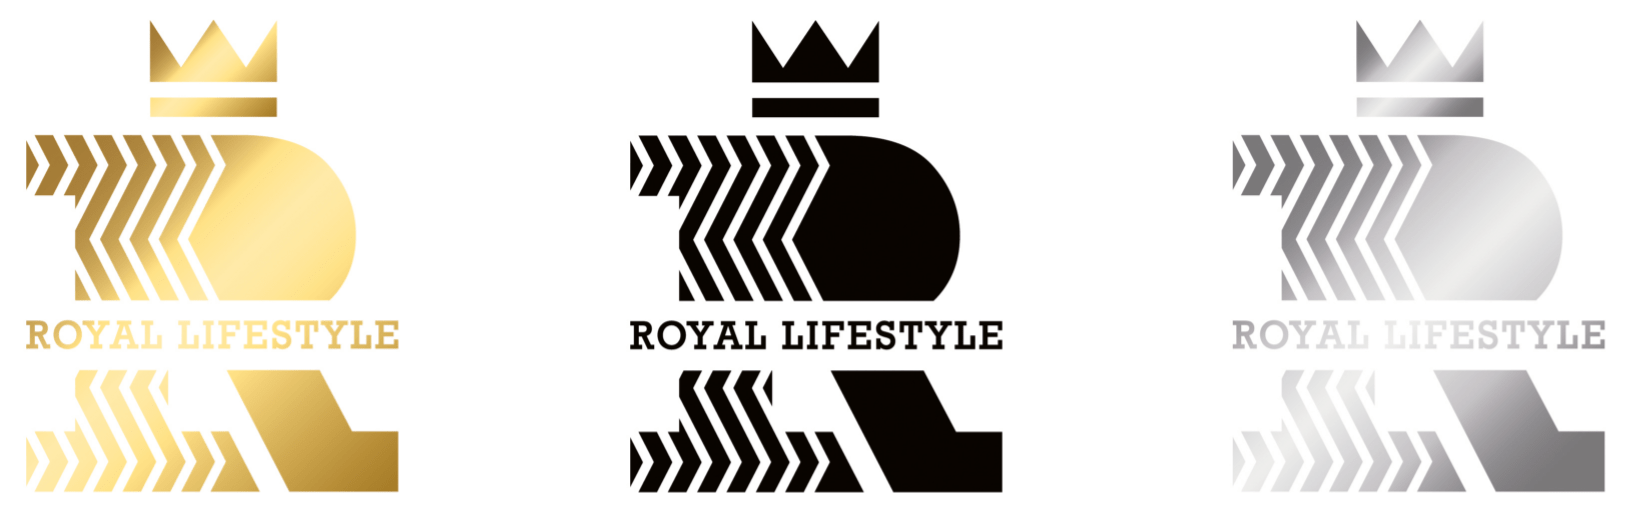 Royal Lifestyle Logo